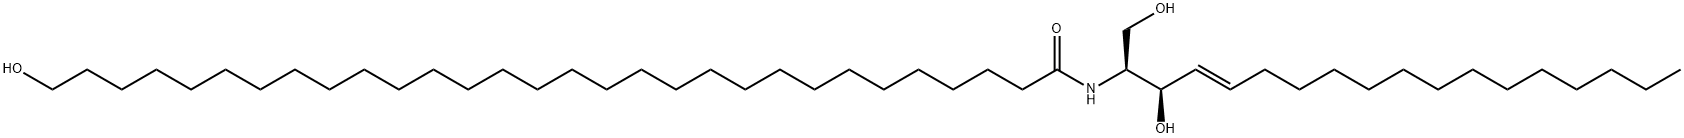 C30(-hydroxy) Ceramide (d18:1/30:0) Structure